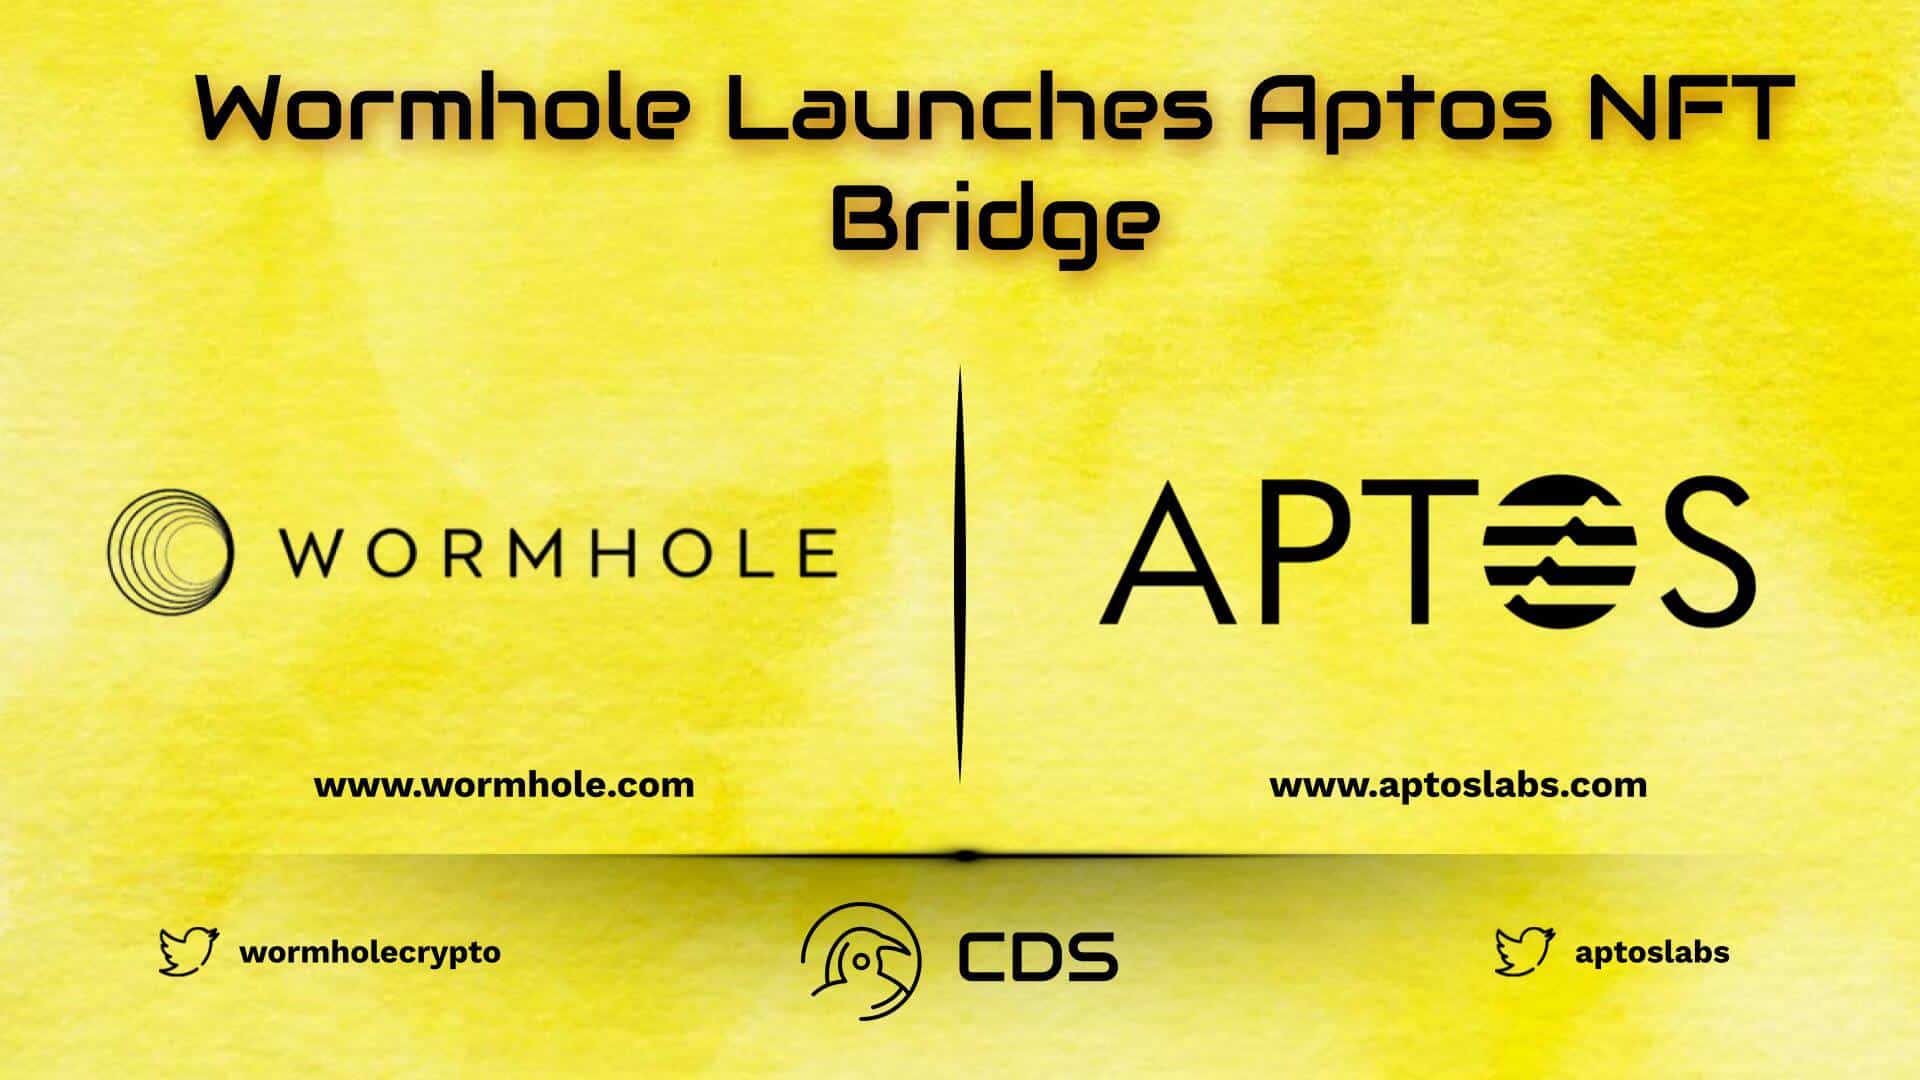 Wormhole Launches Aptos NFT Bridge